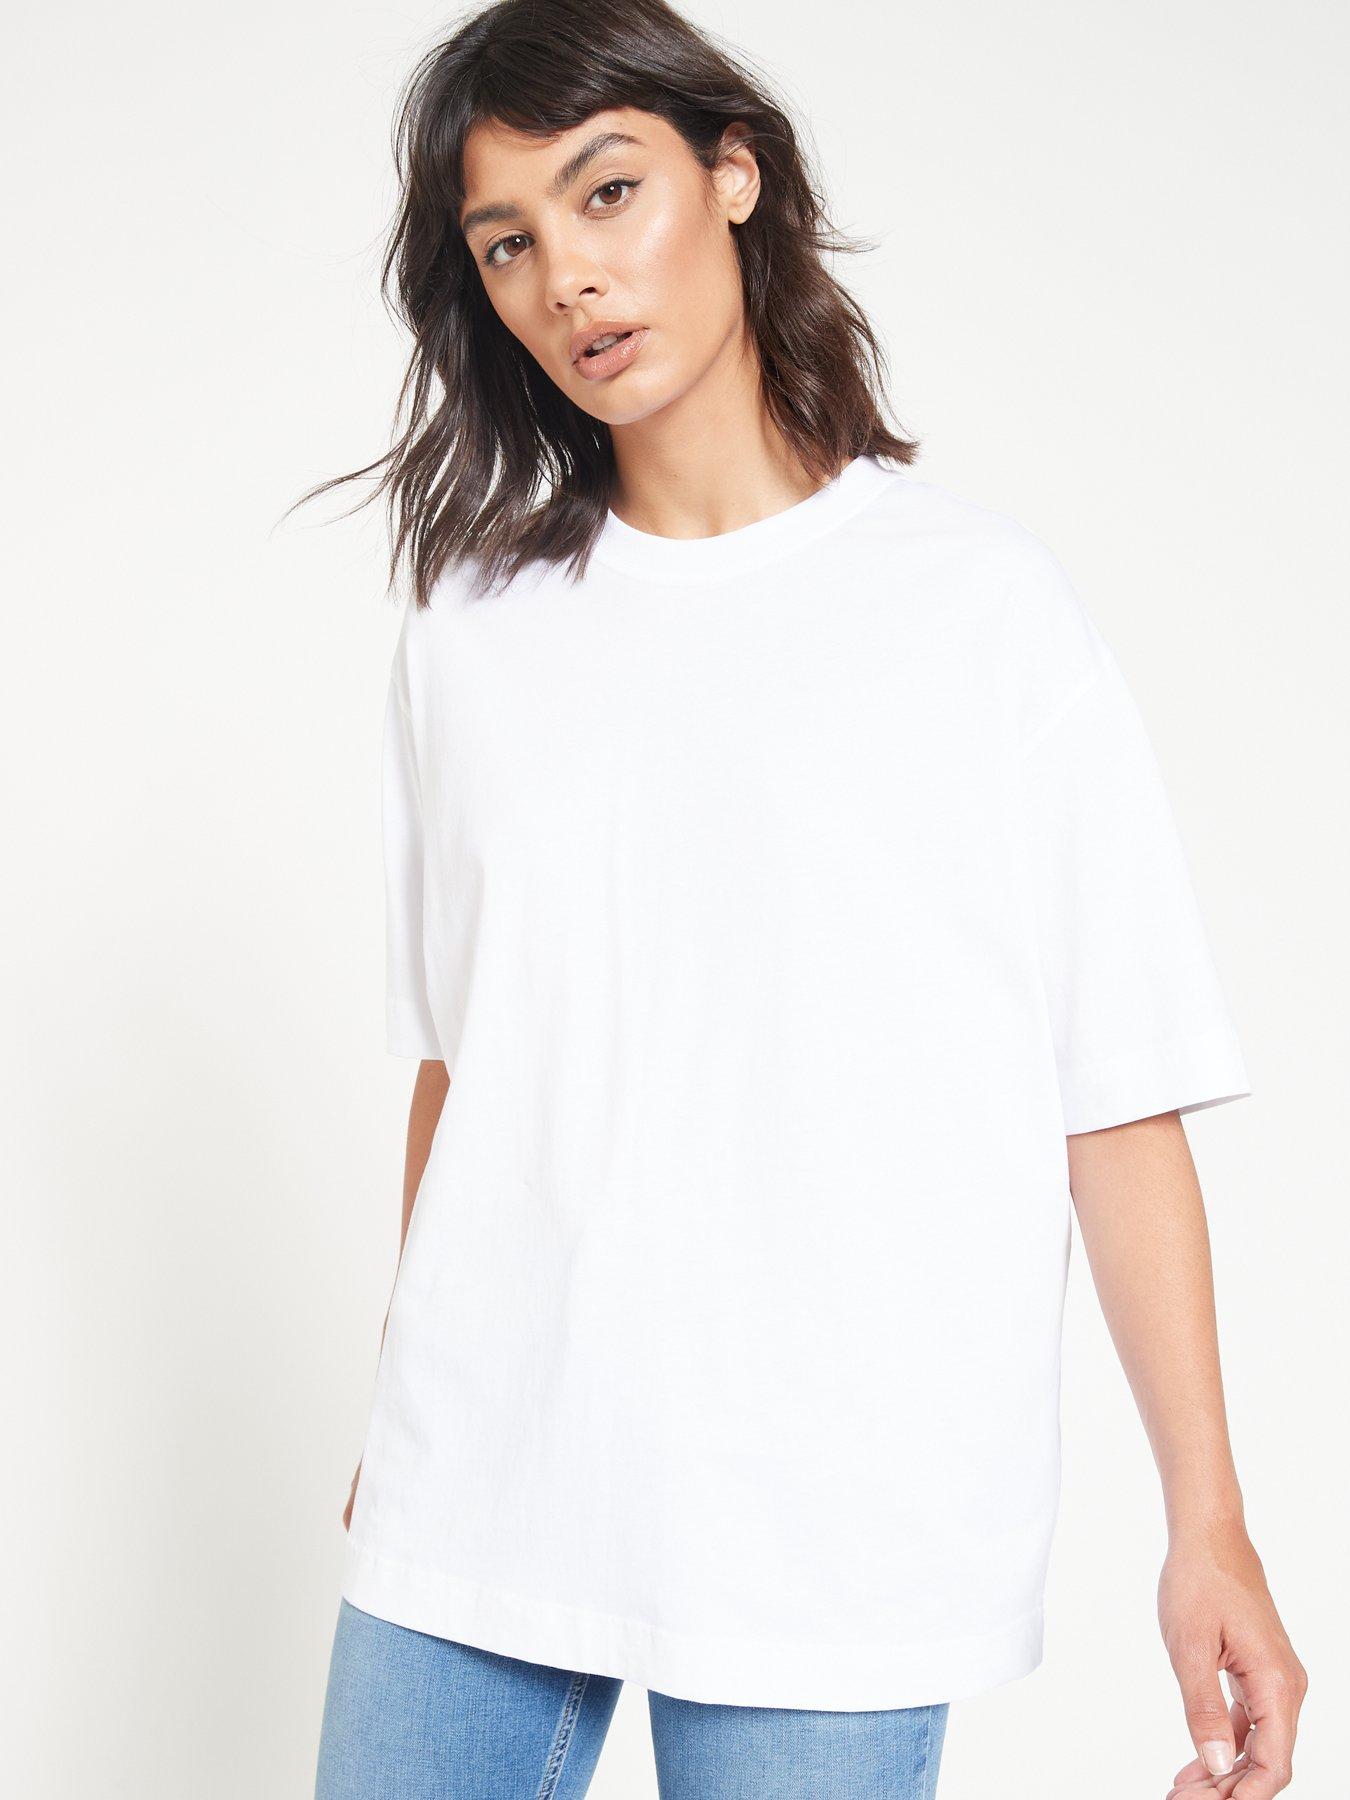 Fly Year-uk Womens Casual Side Split Short Sleeve Longline T-Shirt Top